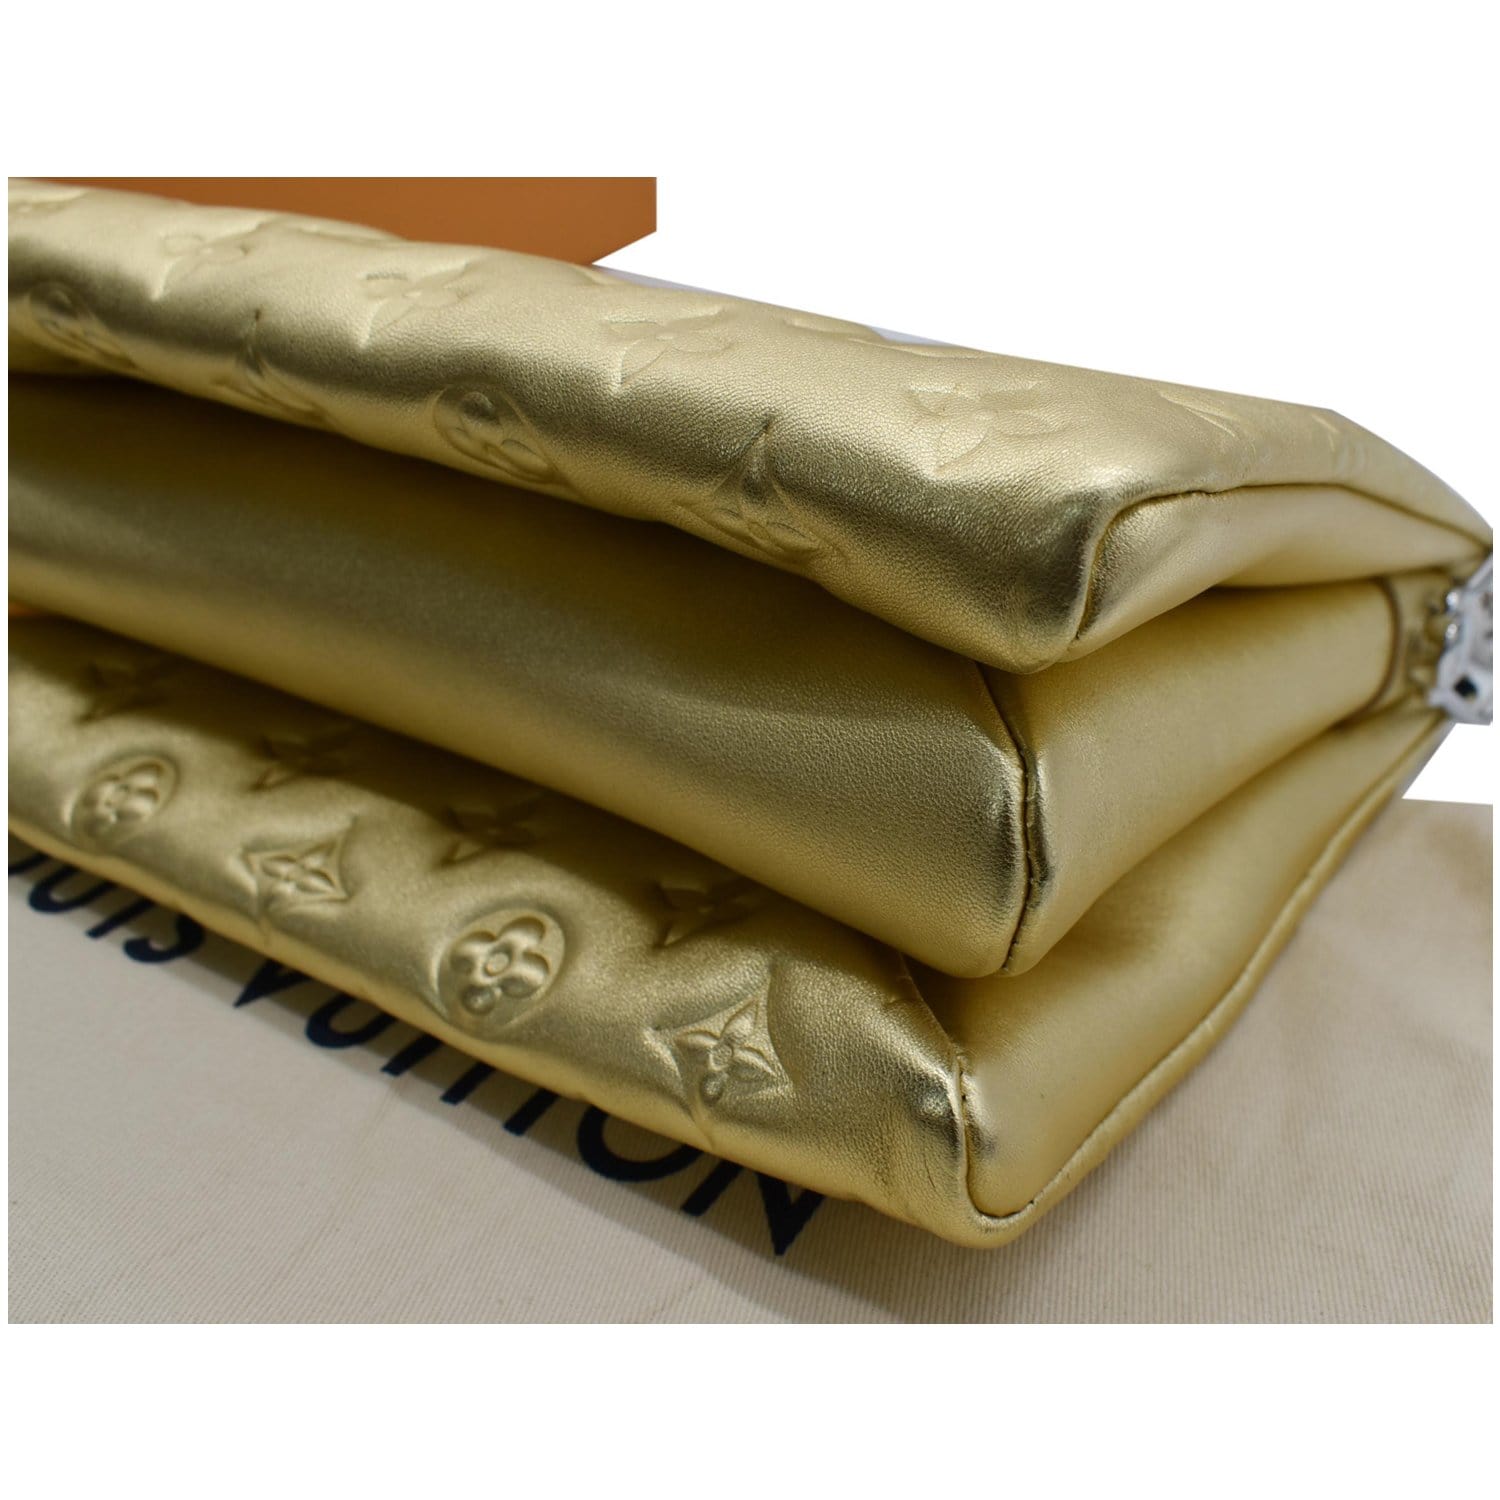 LOUIS VUITTON Coussin PM Monogram Embossed Shoulder Bag Gold - 20% OFF